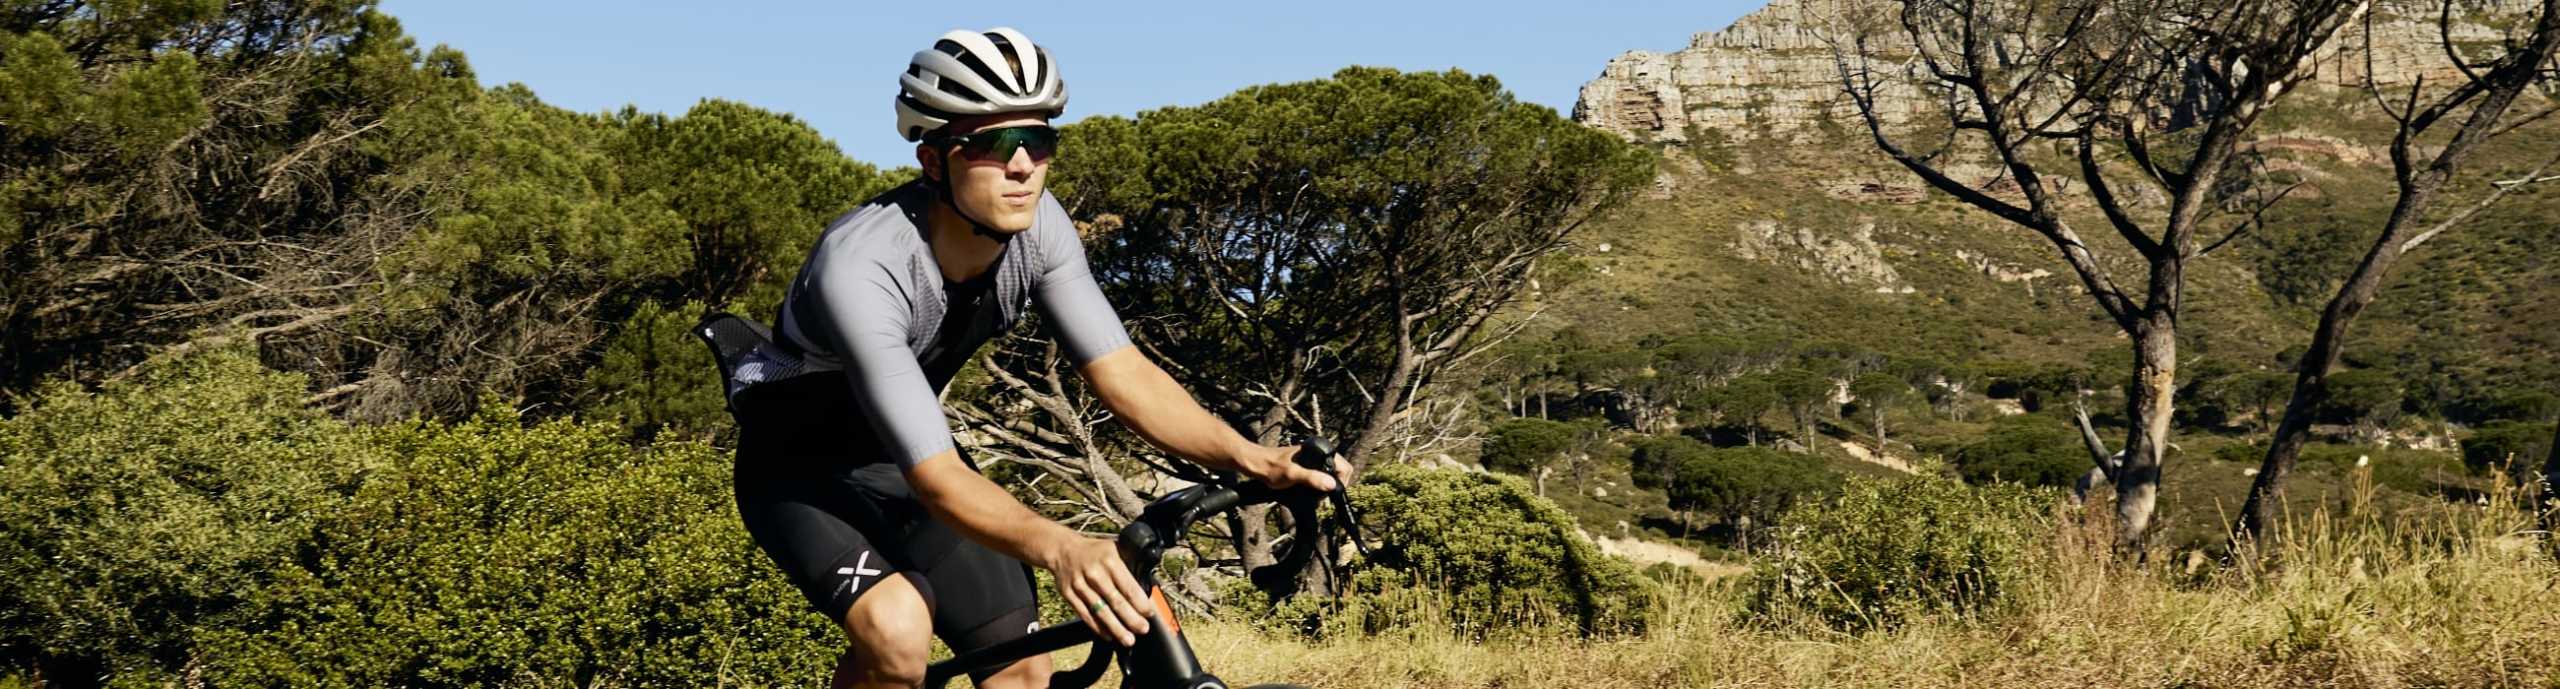 Male cyclist wearing Enjoy Climber cycling jersey